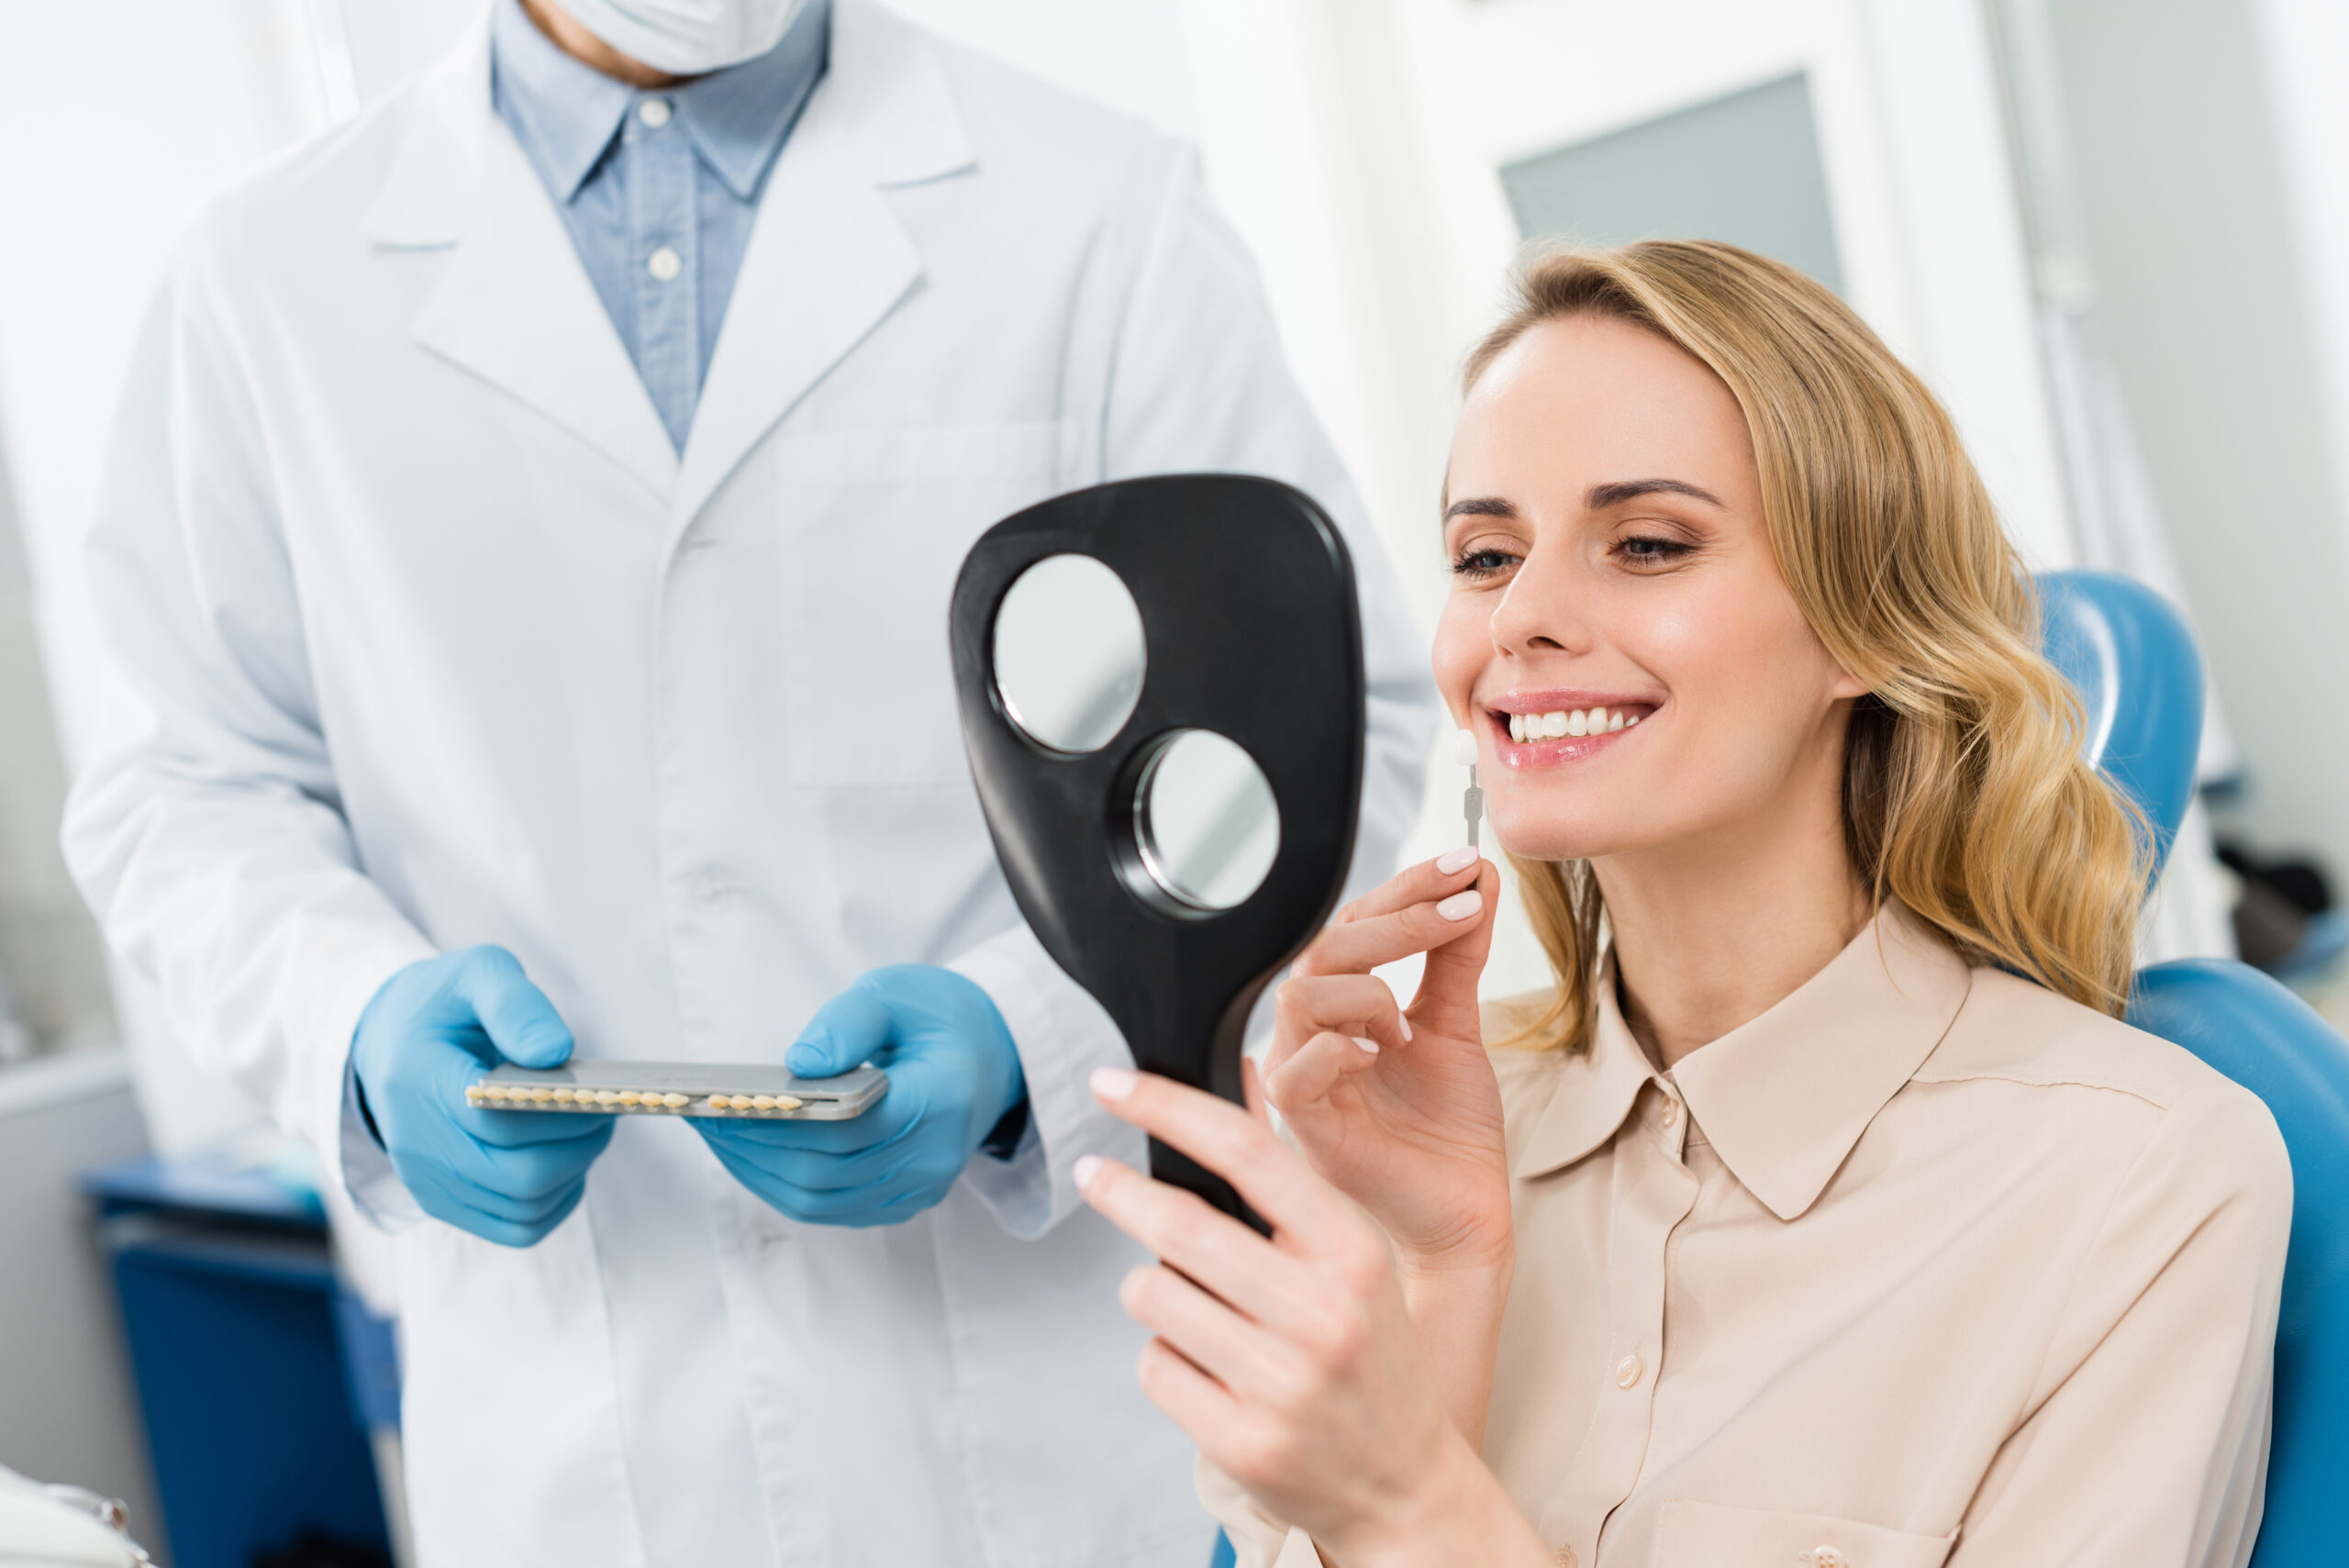 Woman choosing dental implants abroad looking at mirror in modern dental clinic